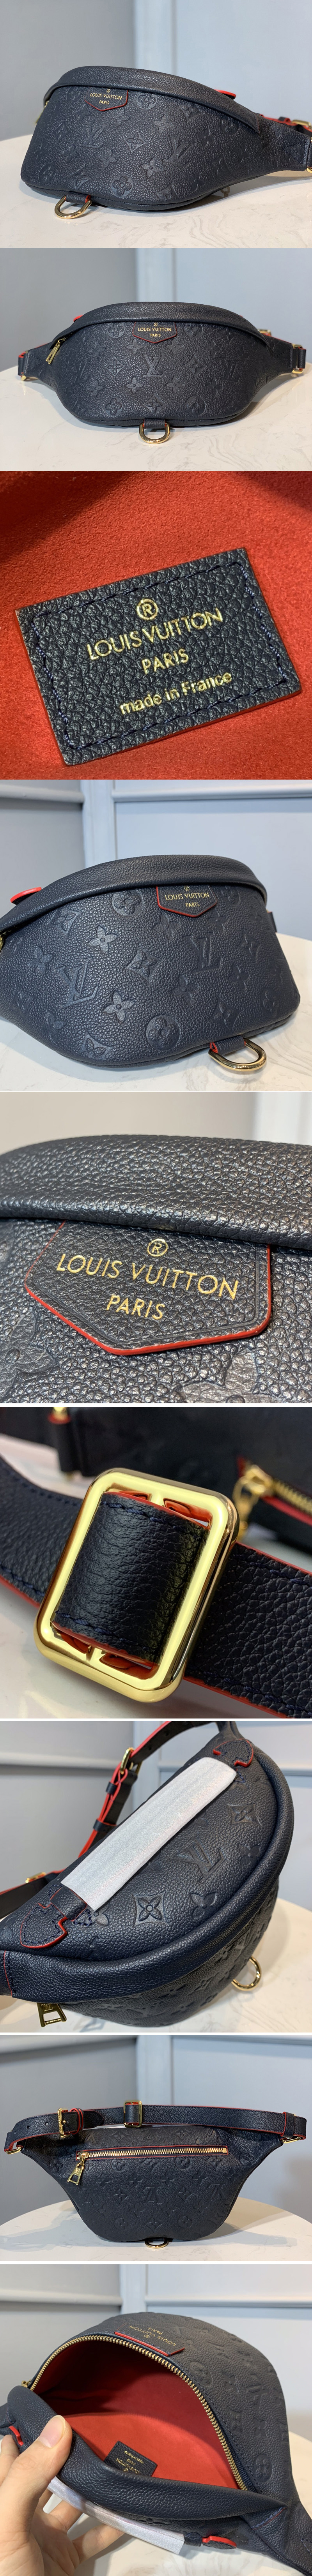 Replica Louis Vuitton M44812 LV Bumbag in Navy Blue Monogram Empreinte leather